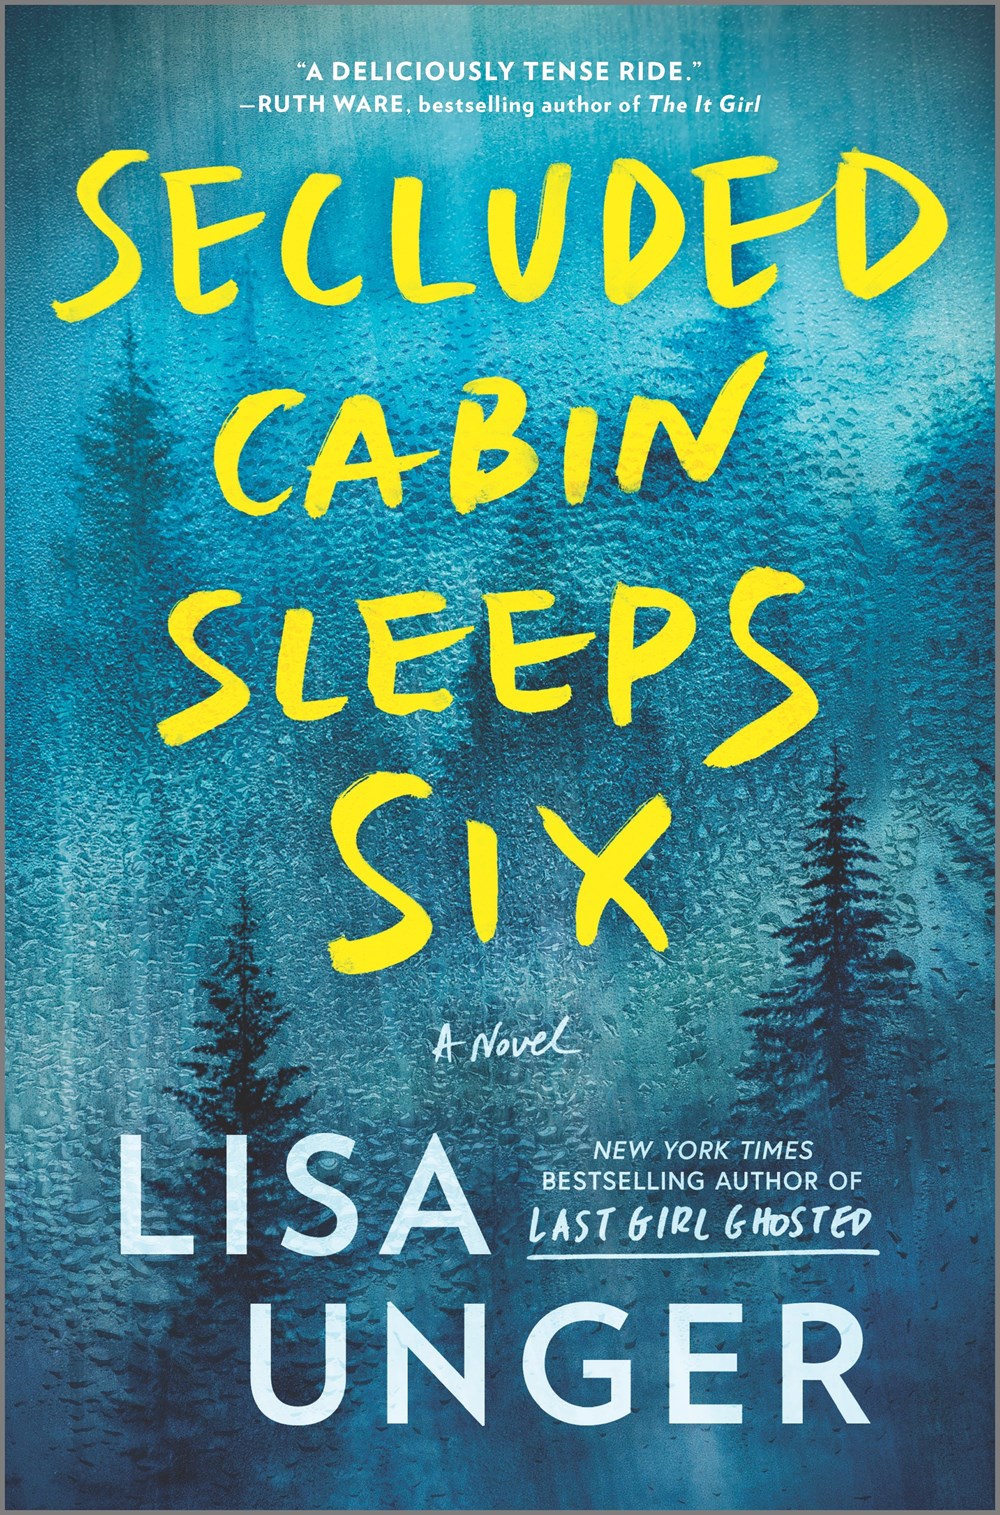 Spoiler Alert! Secluded Cabin Sleeps Six by Lisa Unger